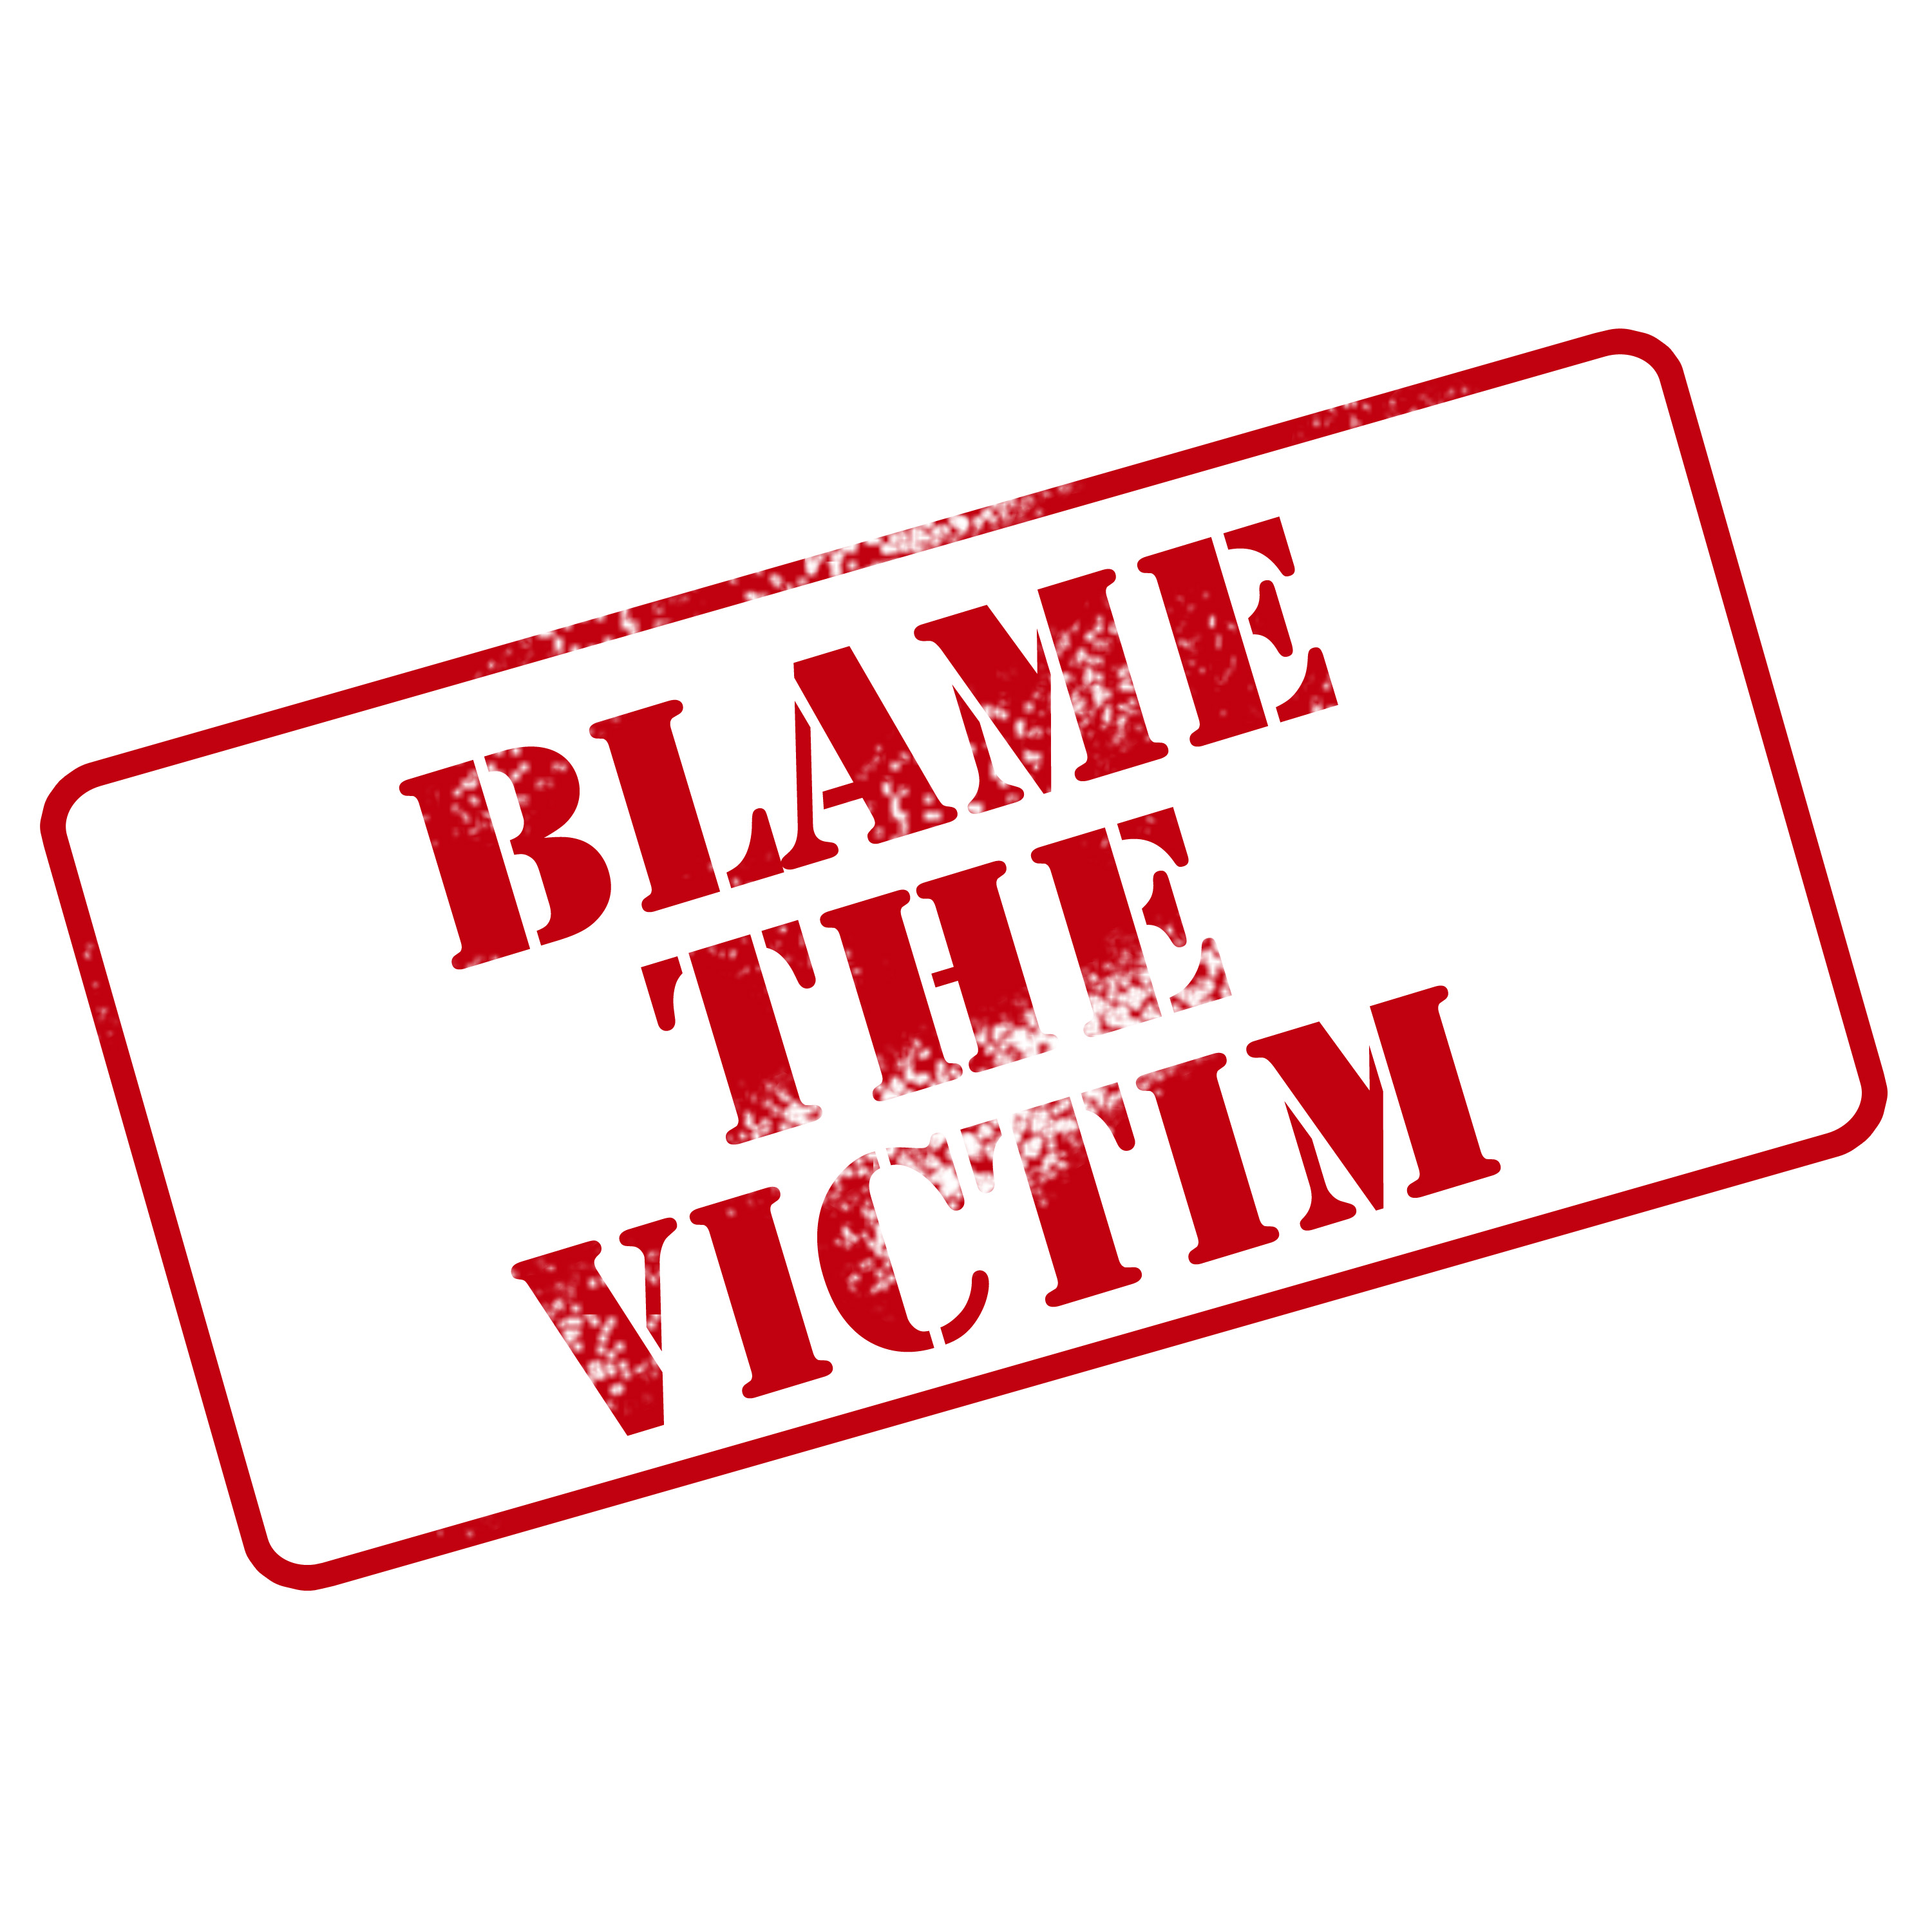 Blame the victim